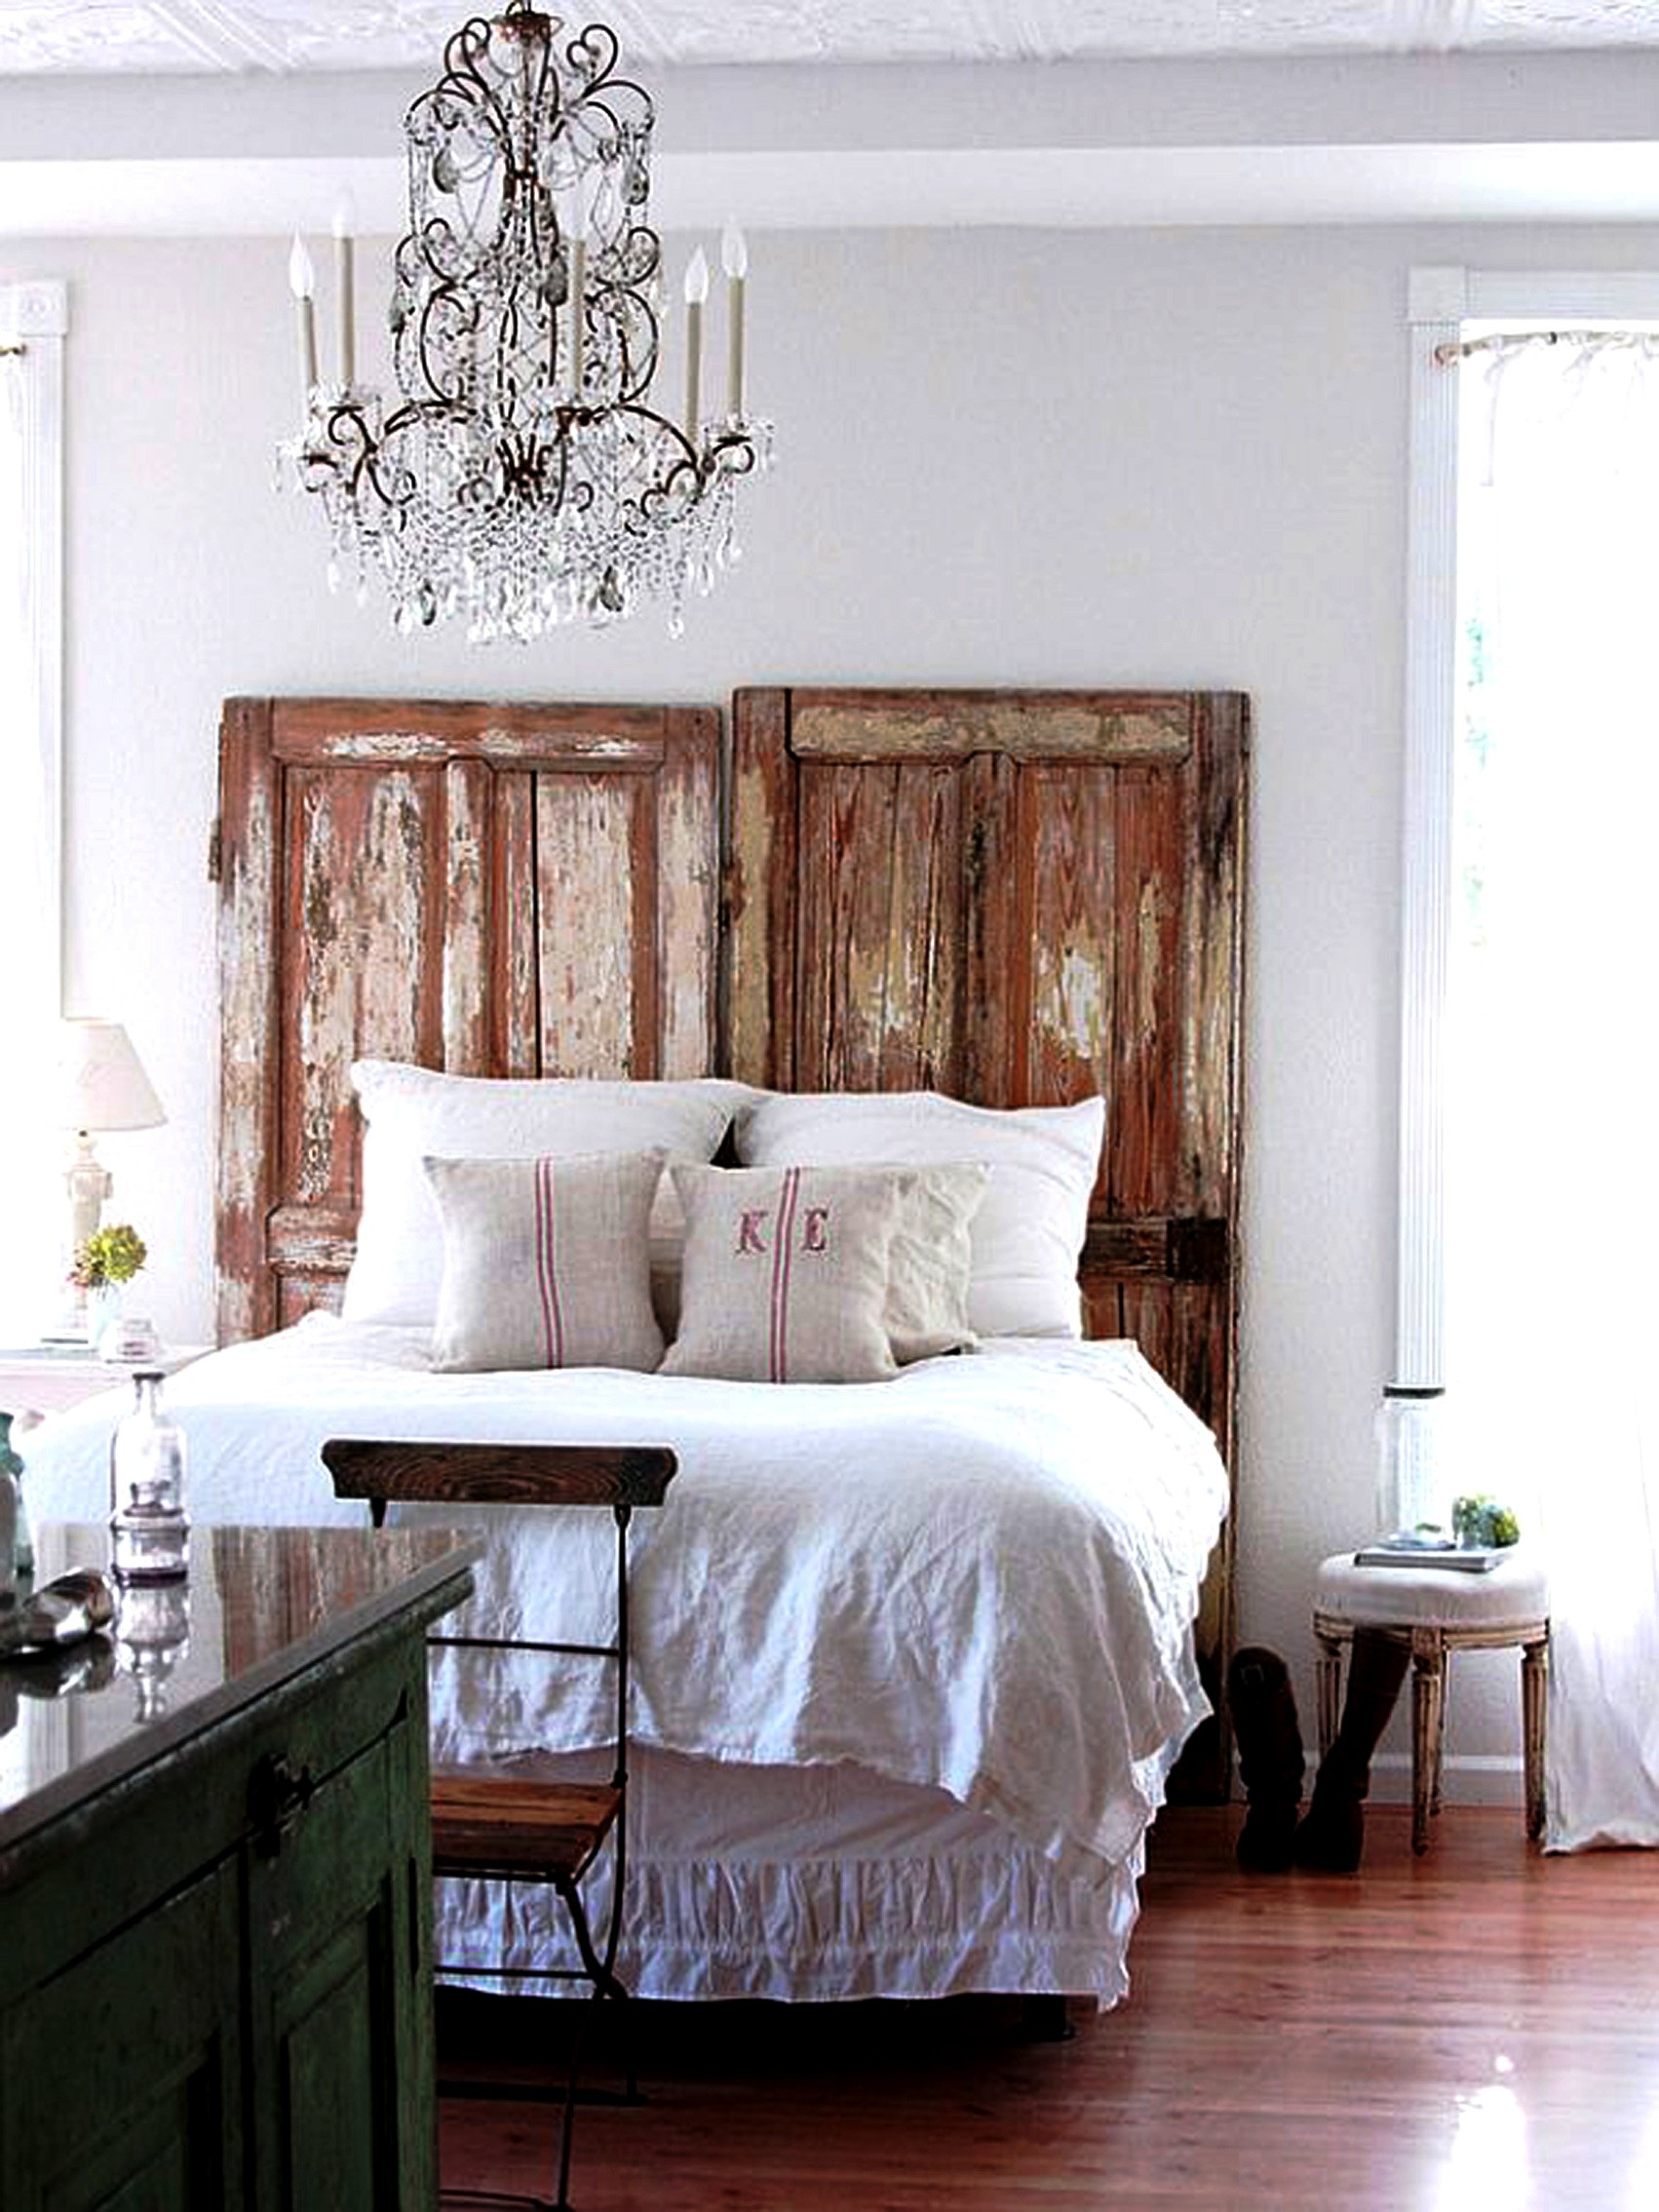 Rustic Bedroom Wall Art
 Rustic Chic Home Decor Ideas – You Bet Your Pierogi